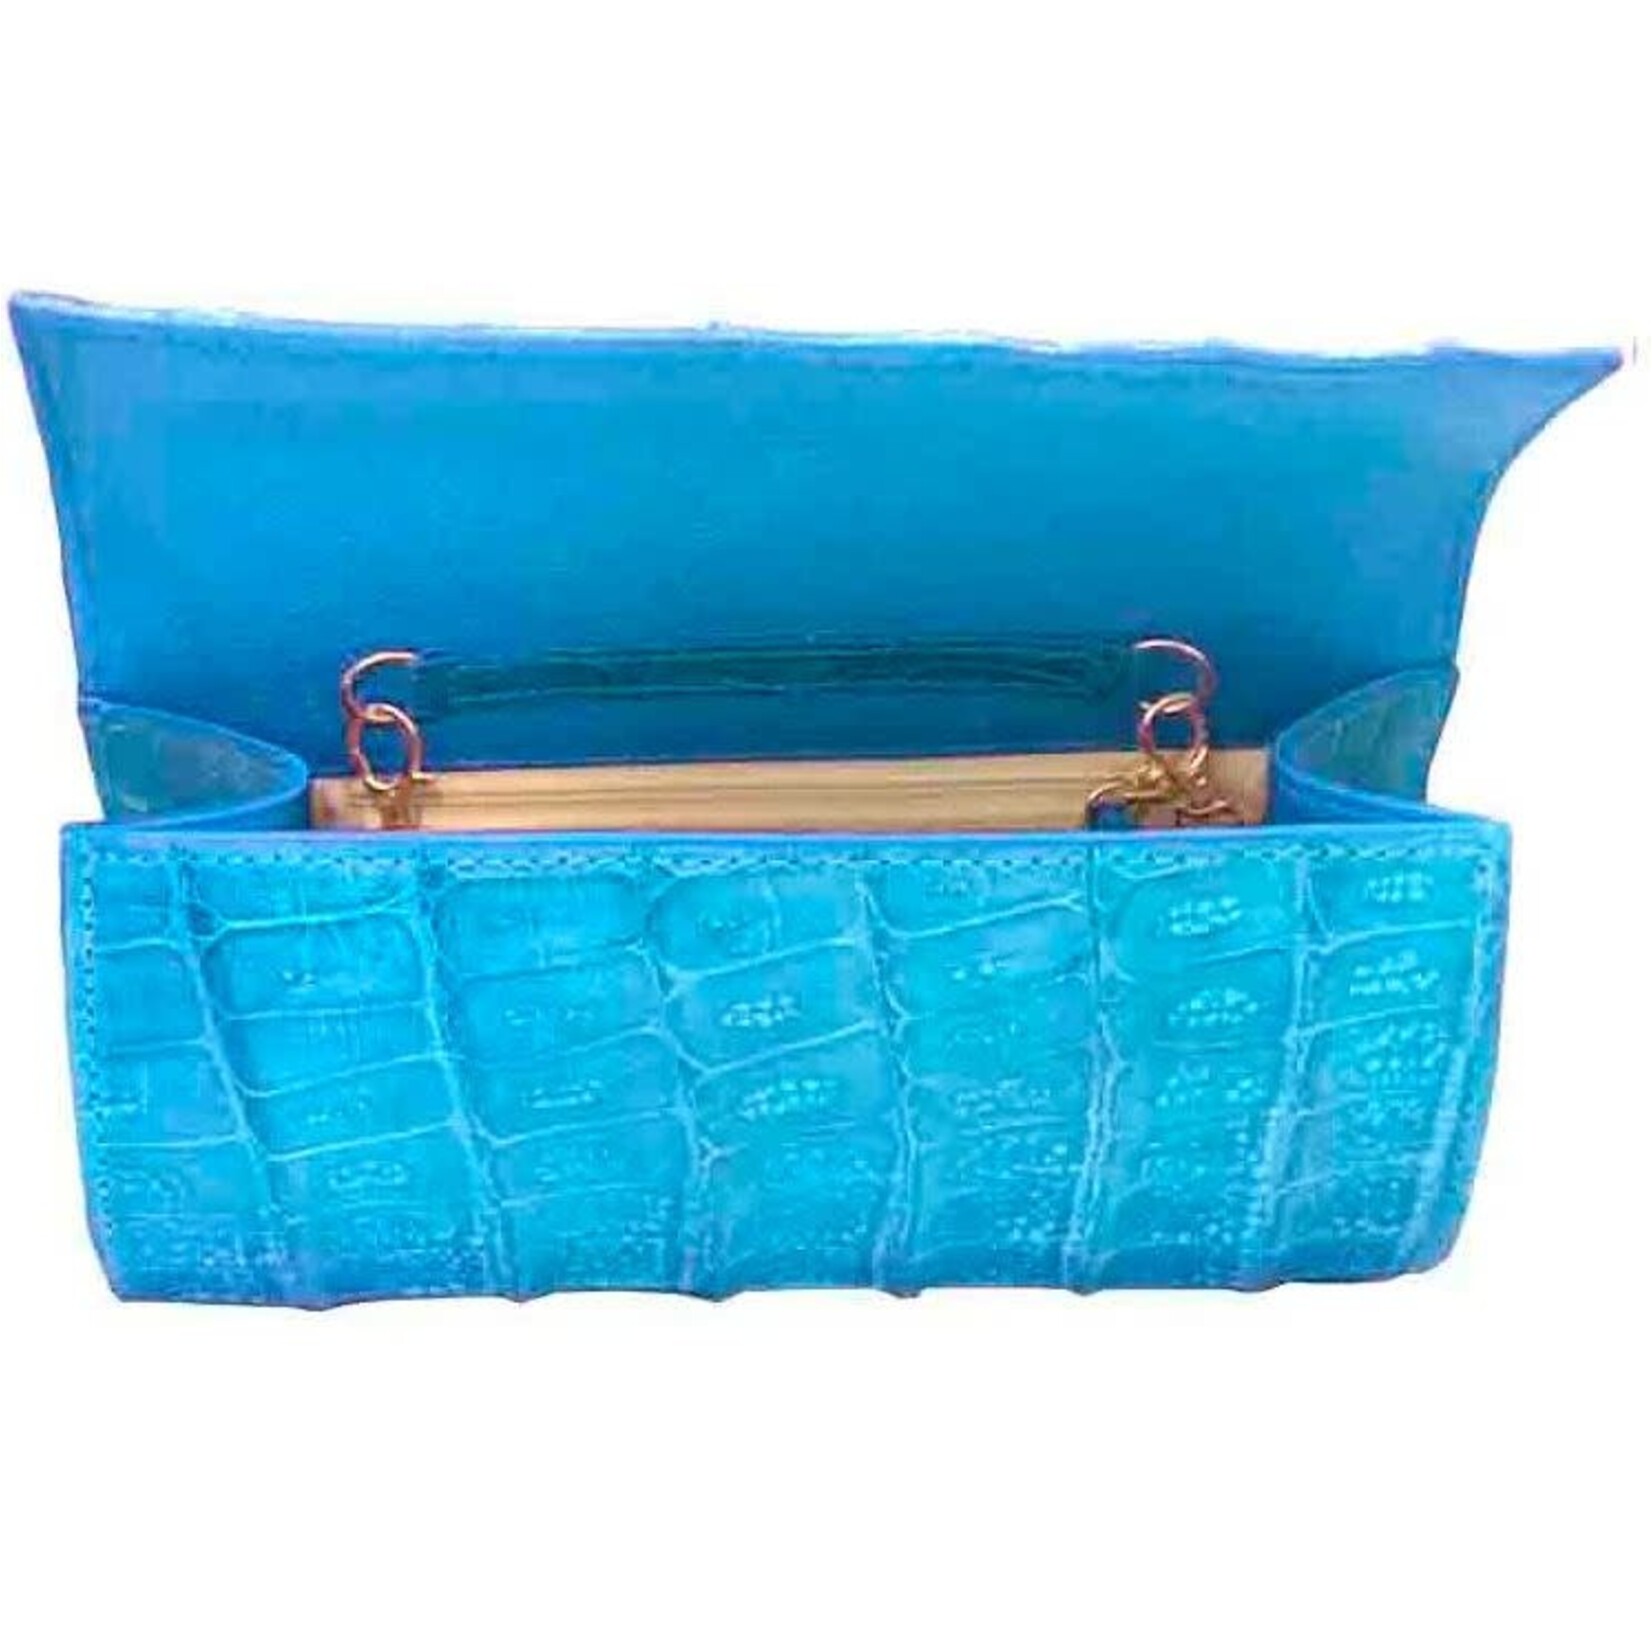 John Cole Turquoise Foggia Large Crocodile Overlap Clutch Handbag